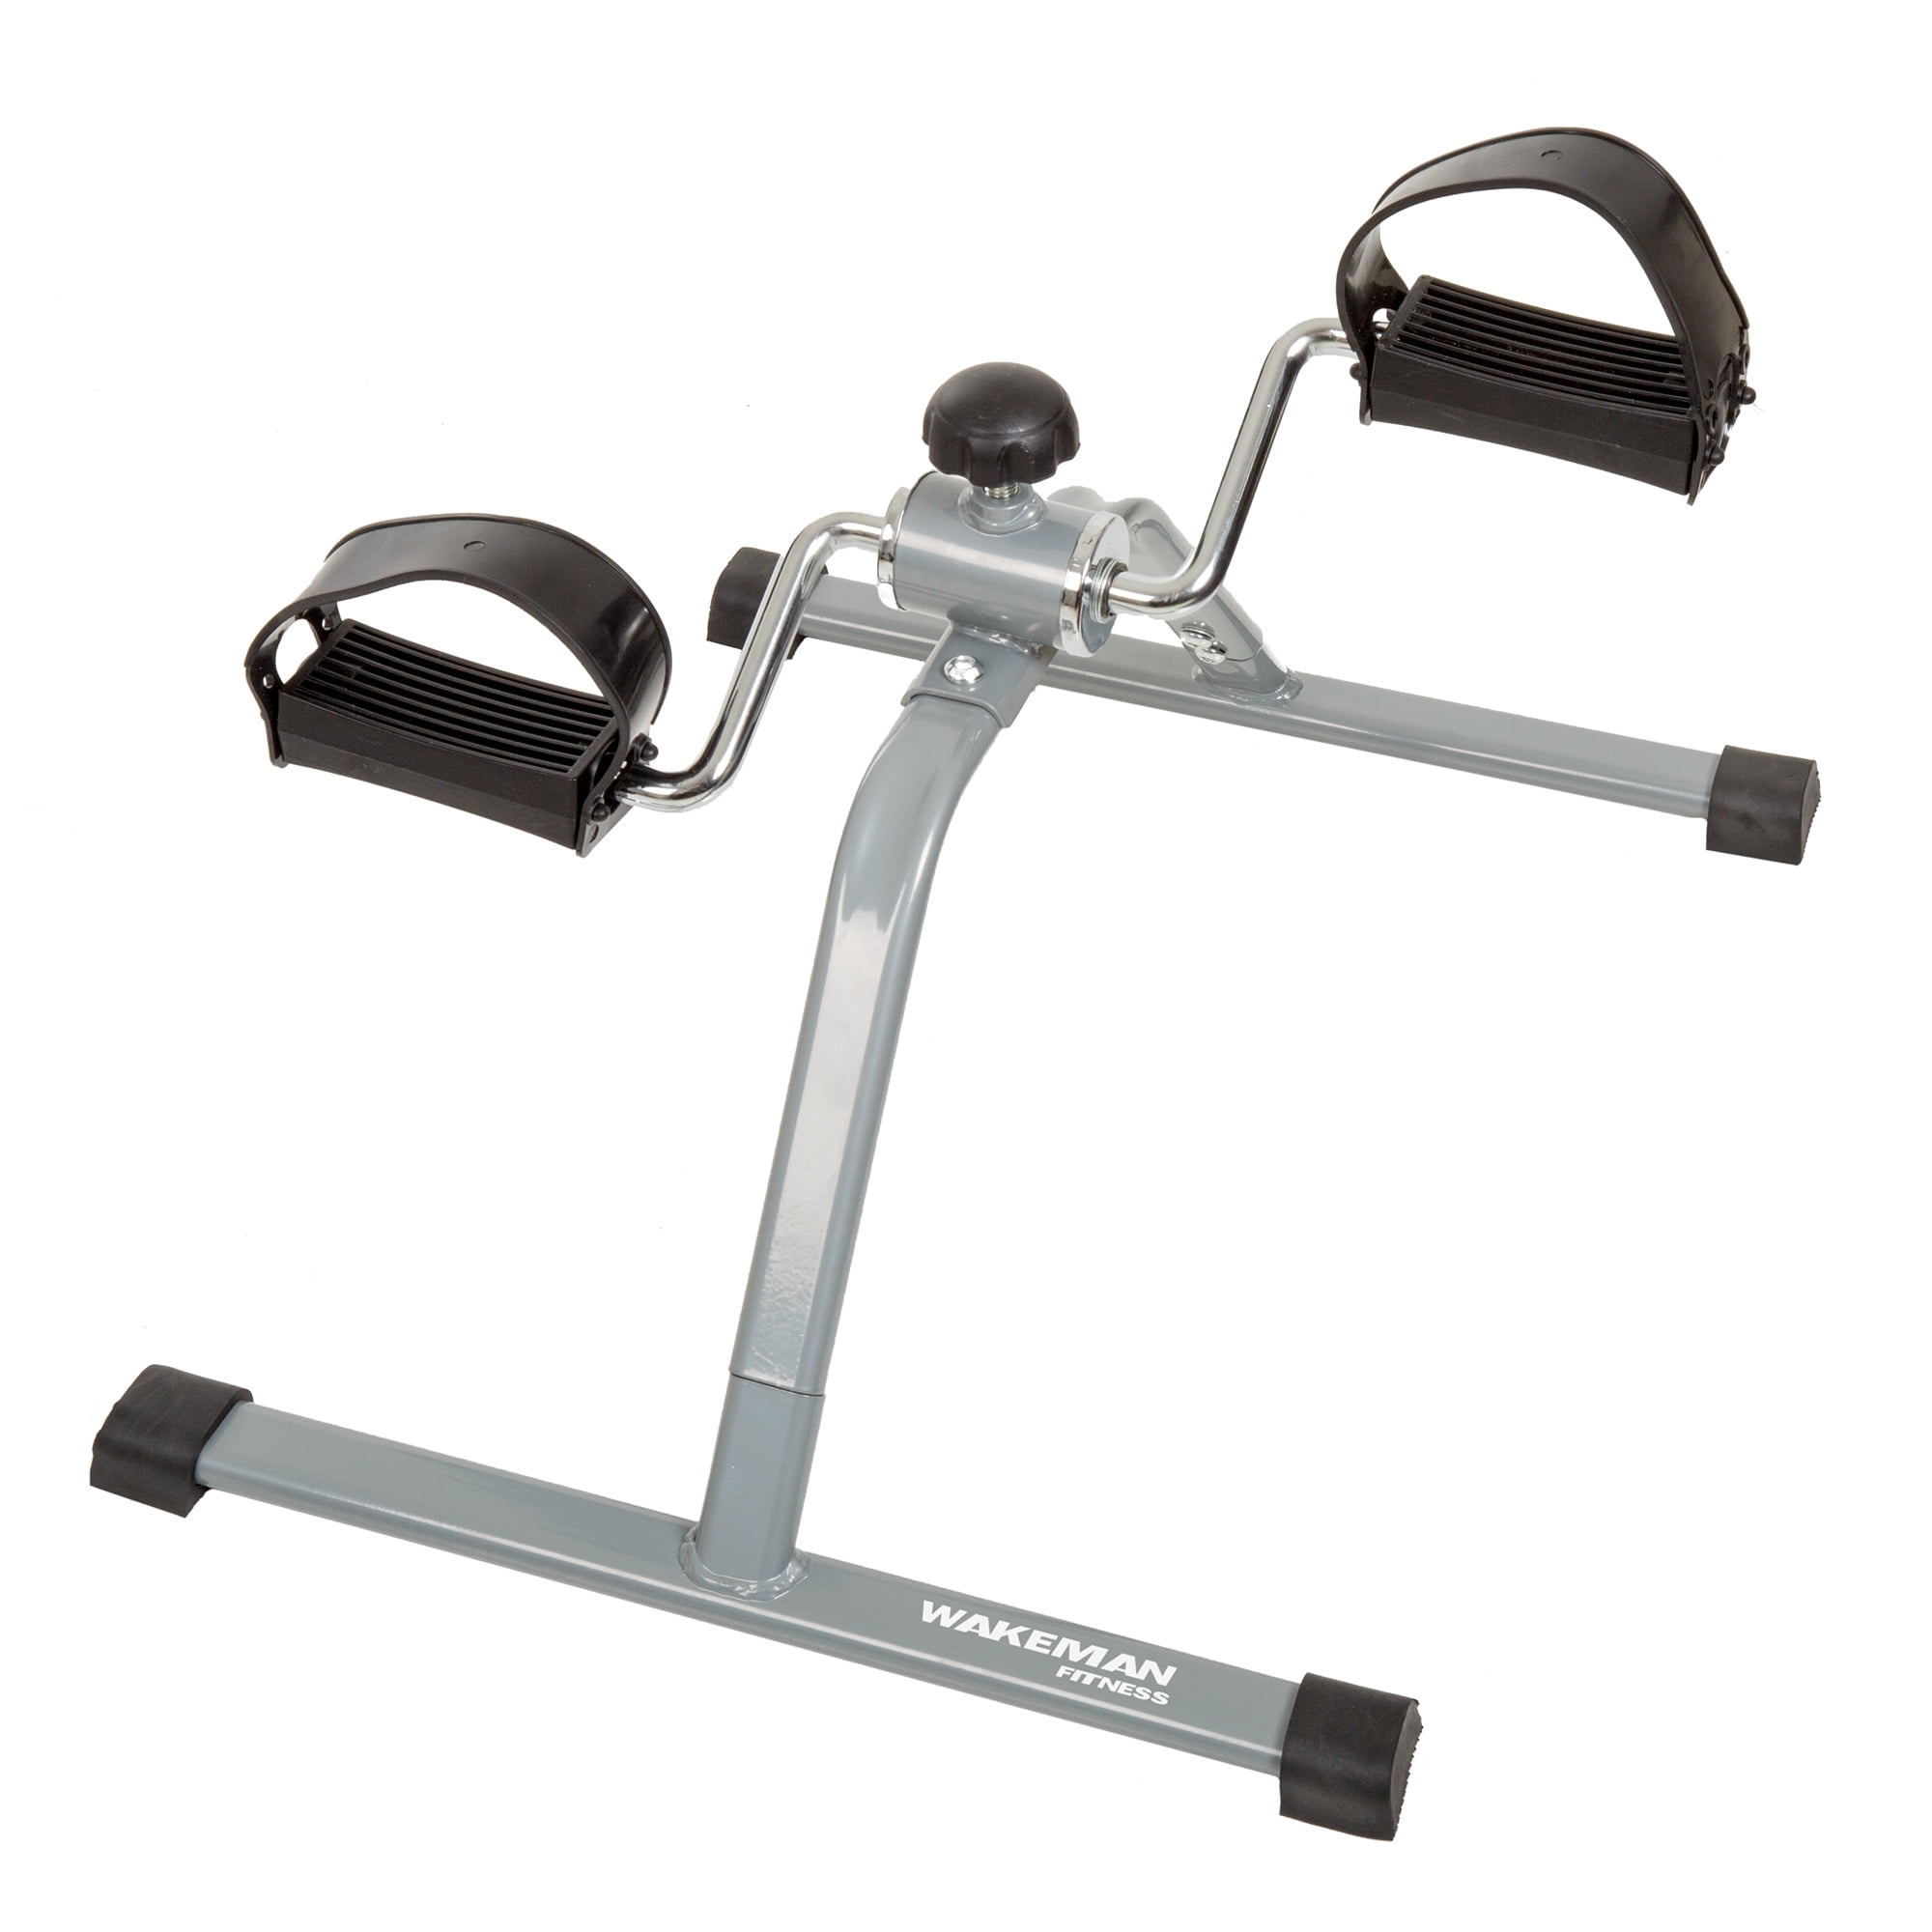 Portable Fitness Pedal Stationary Under Desk Indoor Exercise Machine Bike for AR for sale online 